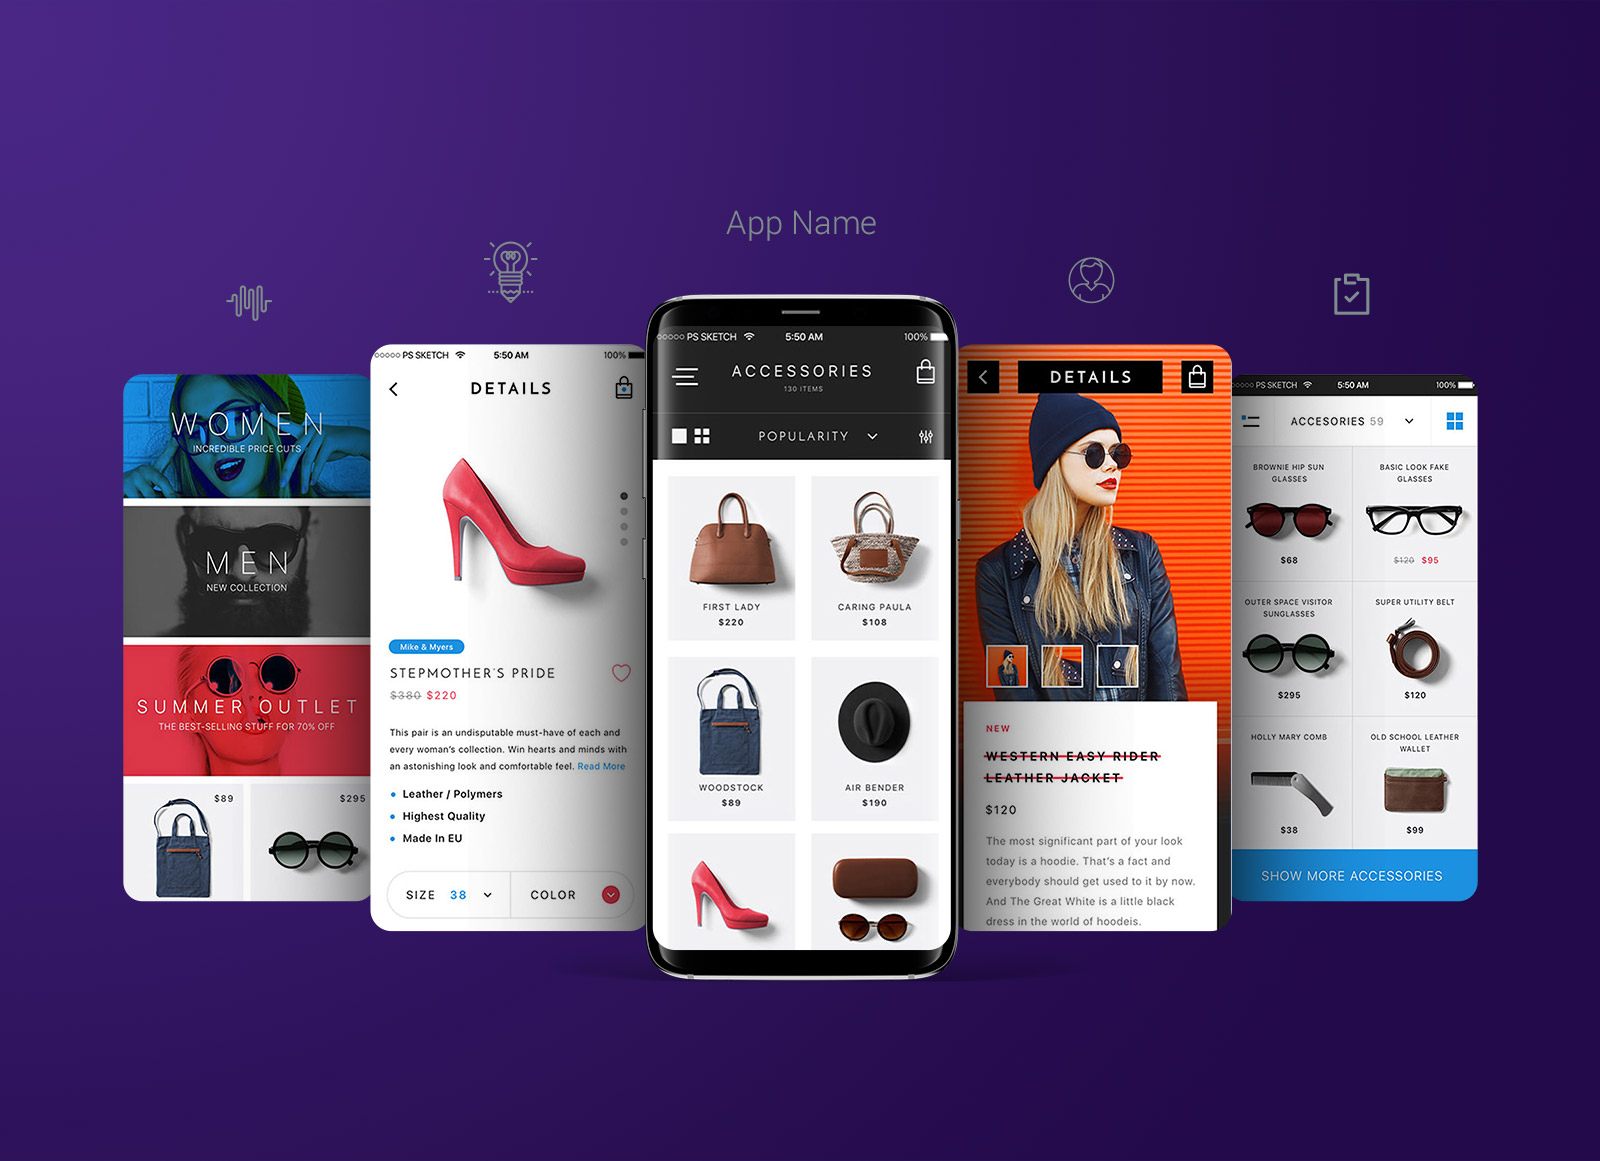 Samsung Galaxy S8 Plus App -Bildschirm Mockup